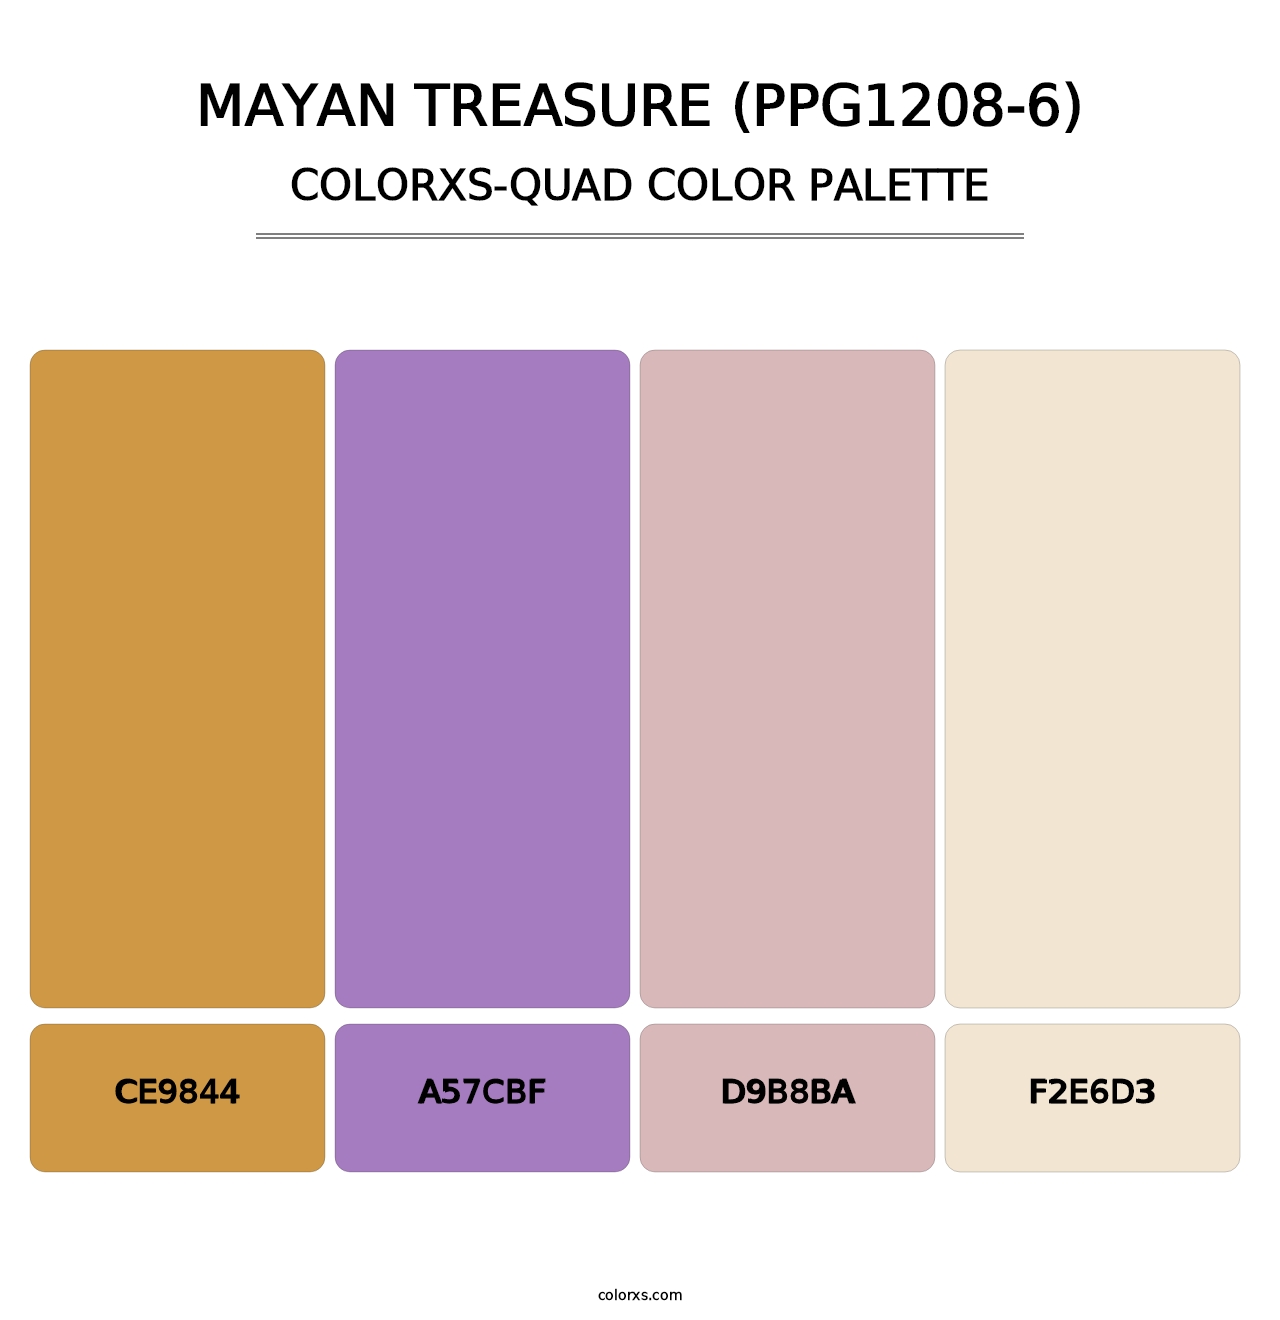 Mayan Treasure (PPG1208-6) - Colorxs Quad Palette